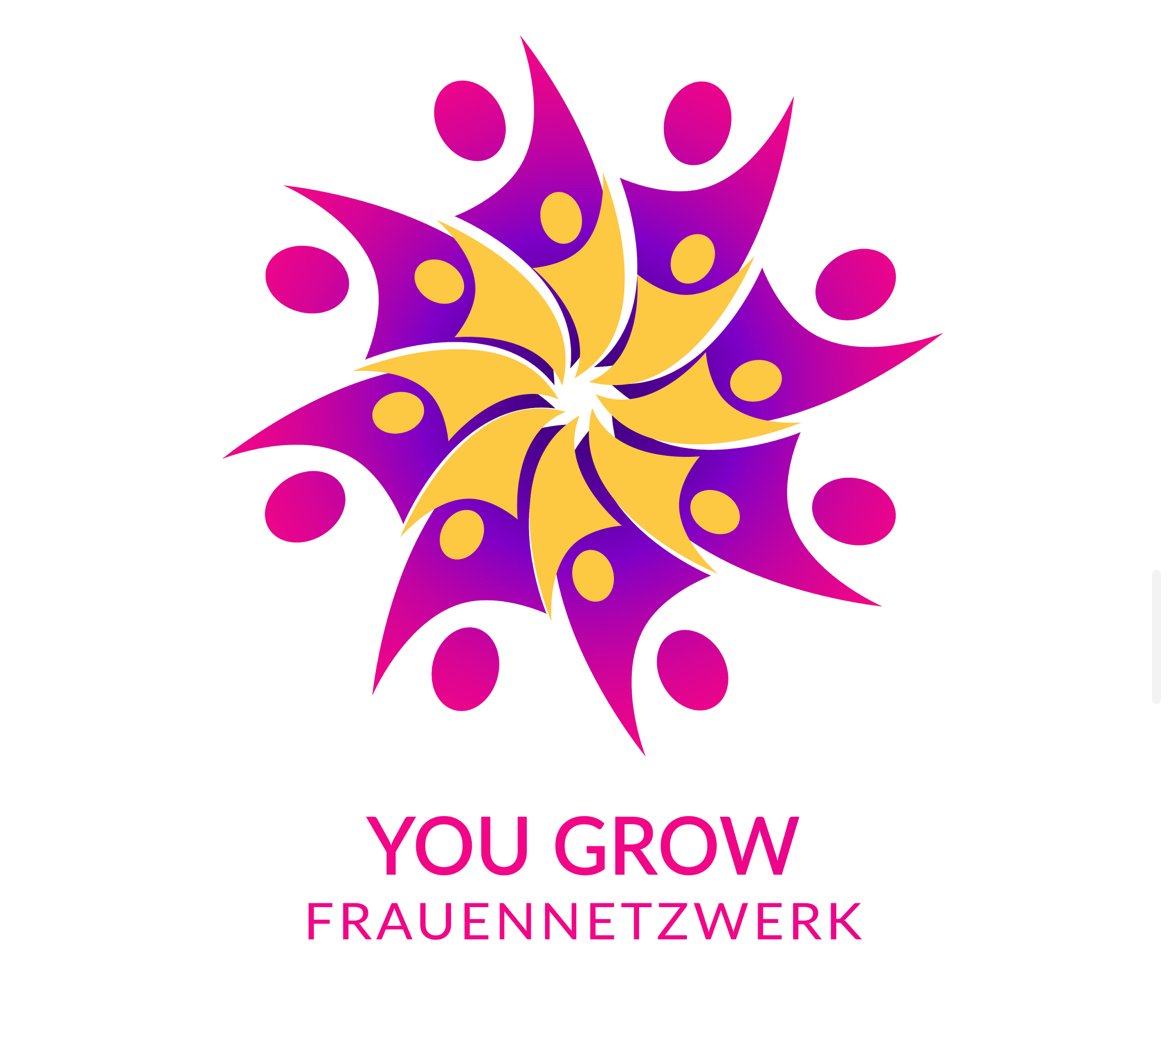 You grow Frauennetzwerk